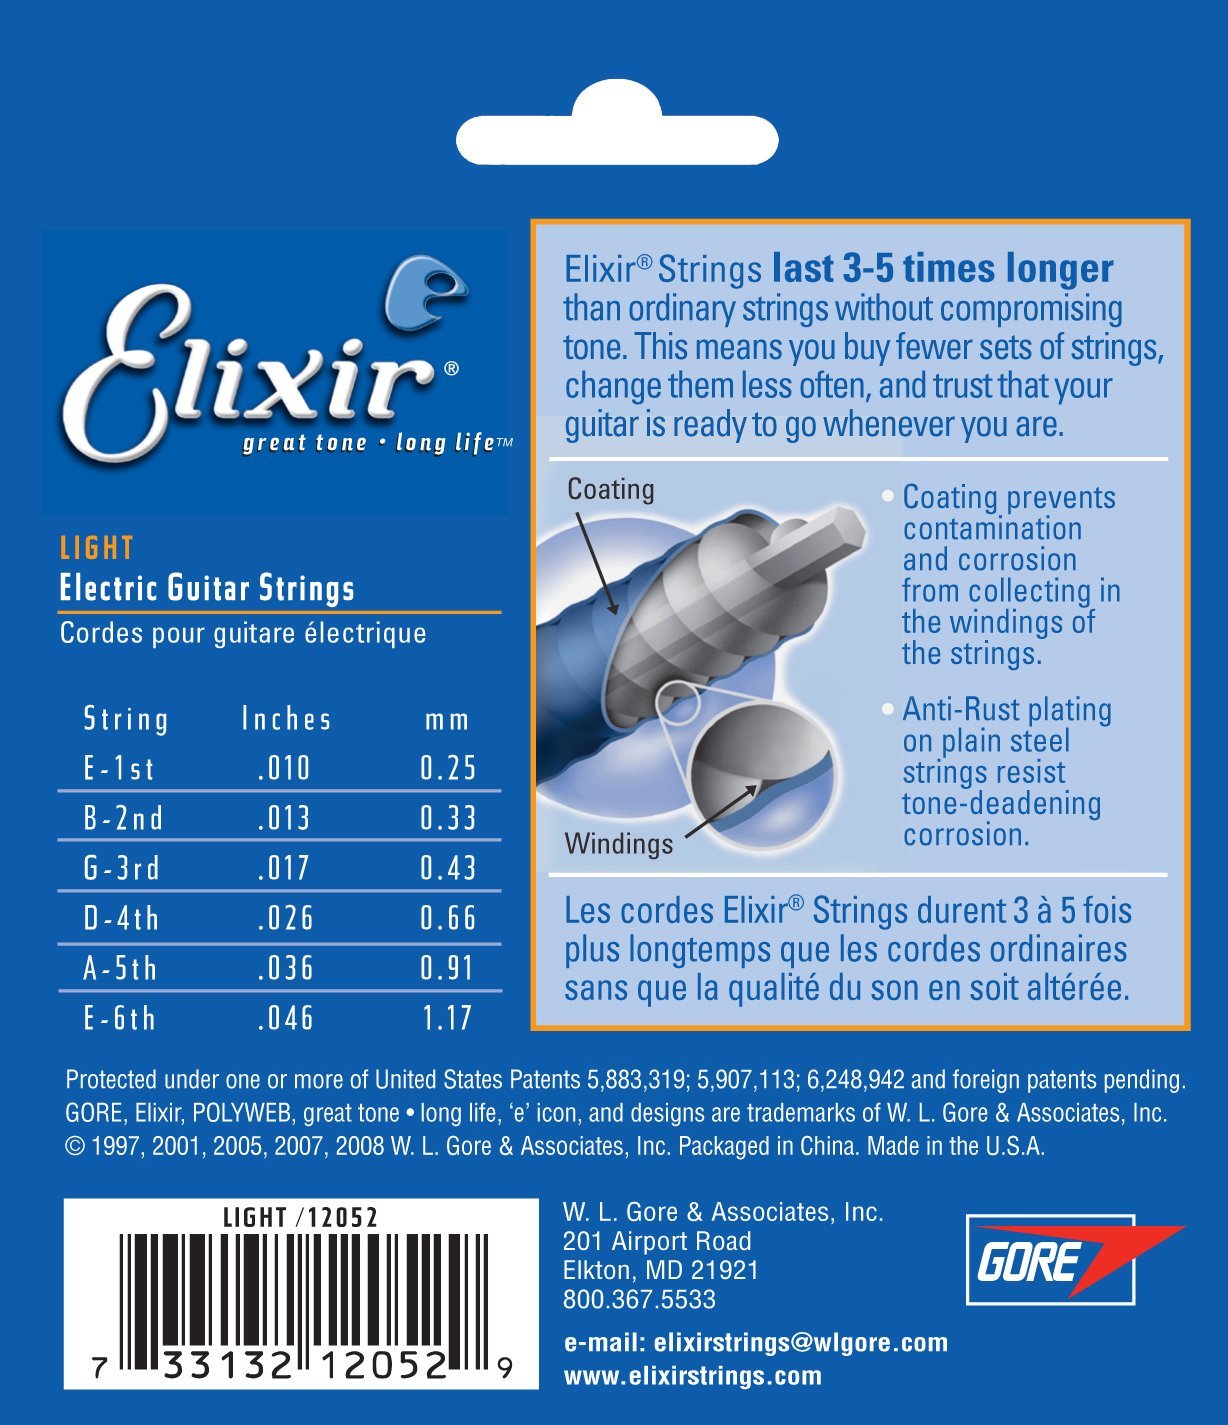 Elixir 12052 Electric Guitar Strings with NANOWEB Coating, Light (.010-.046)